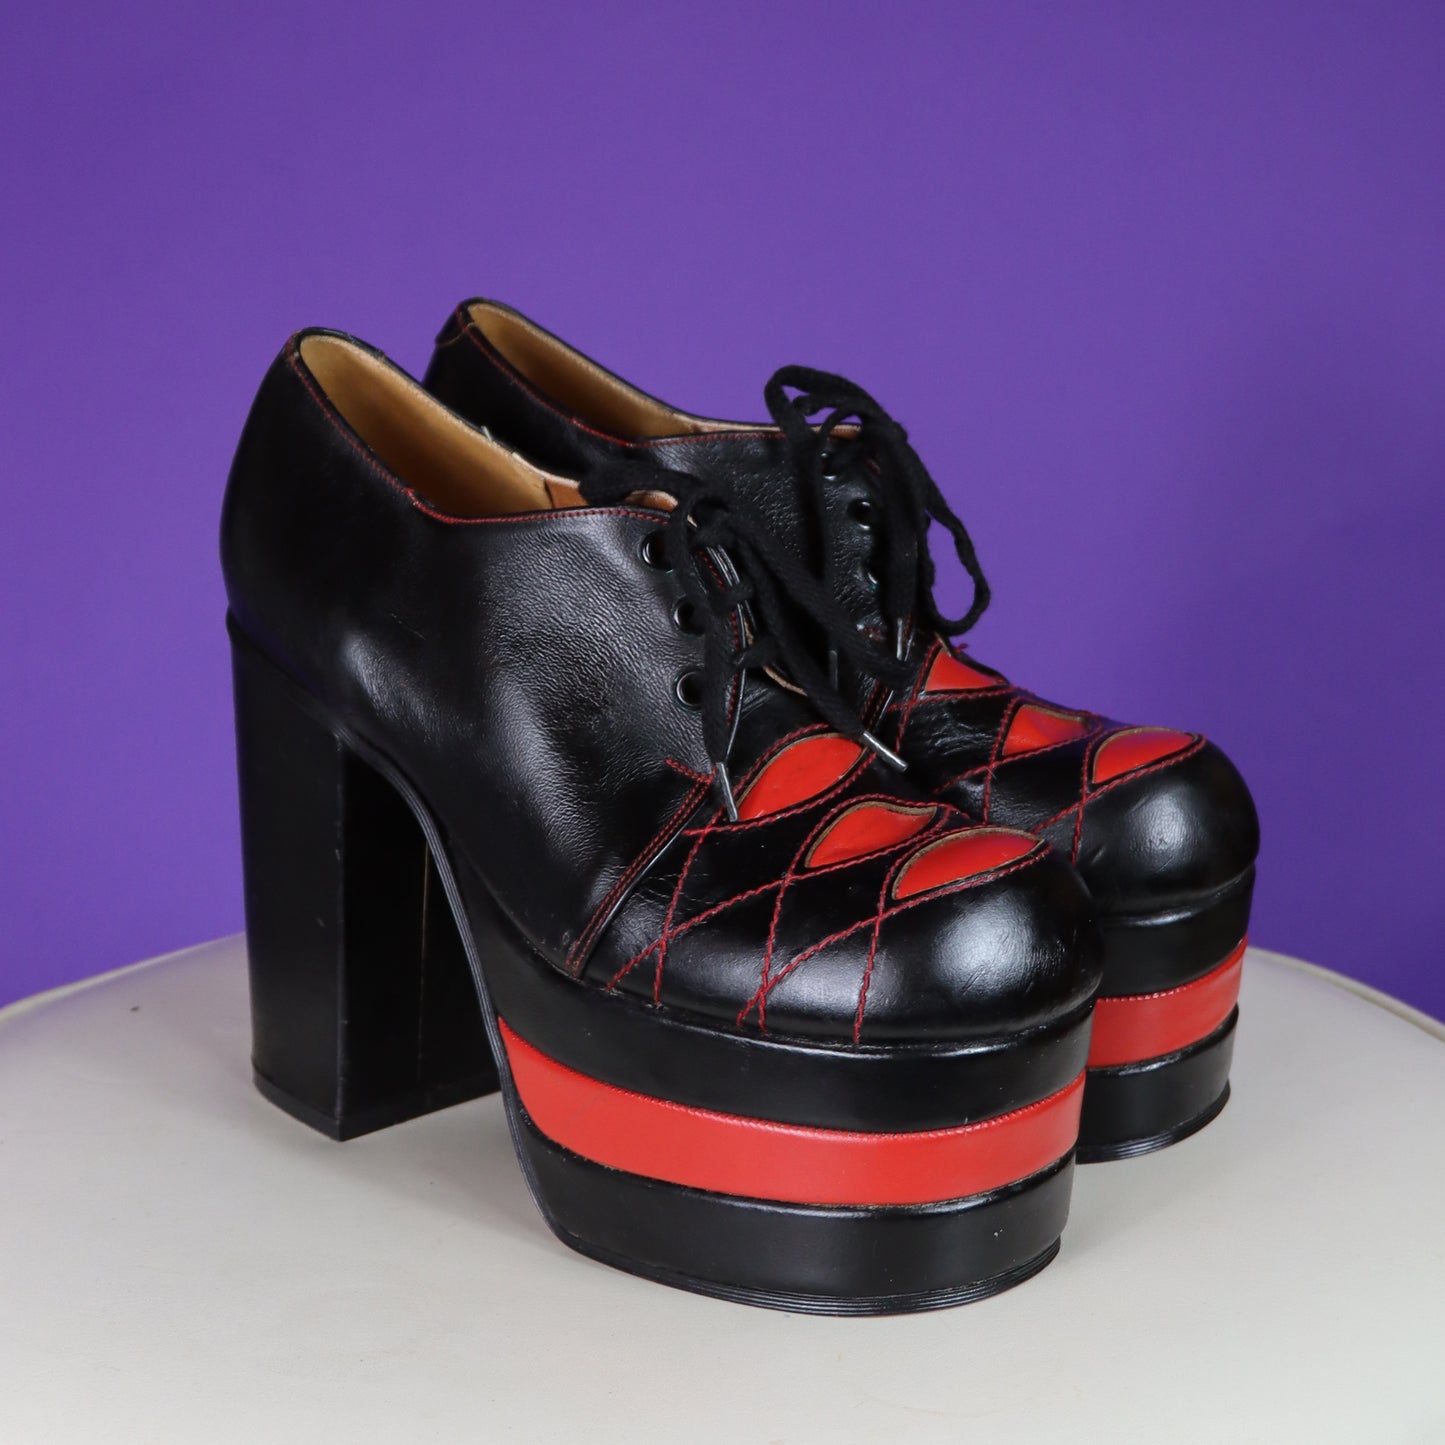 Vintage 1970s Black and Red Triple Helix Platform Shoes